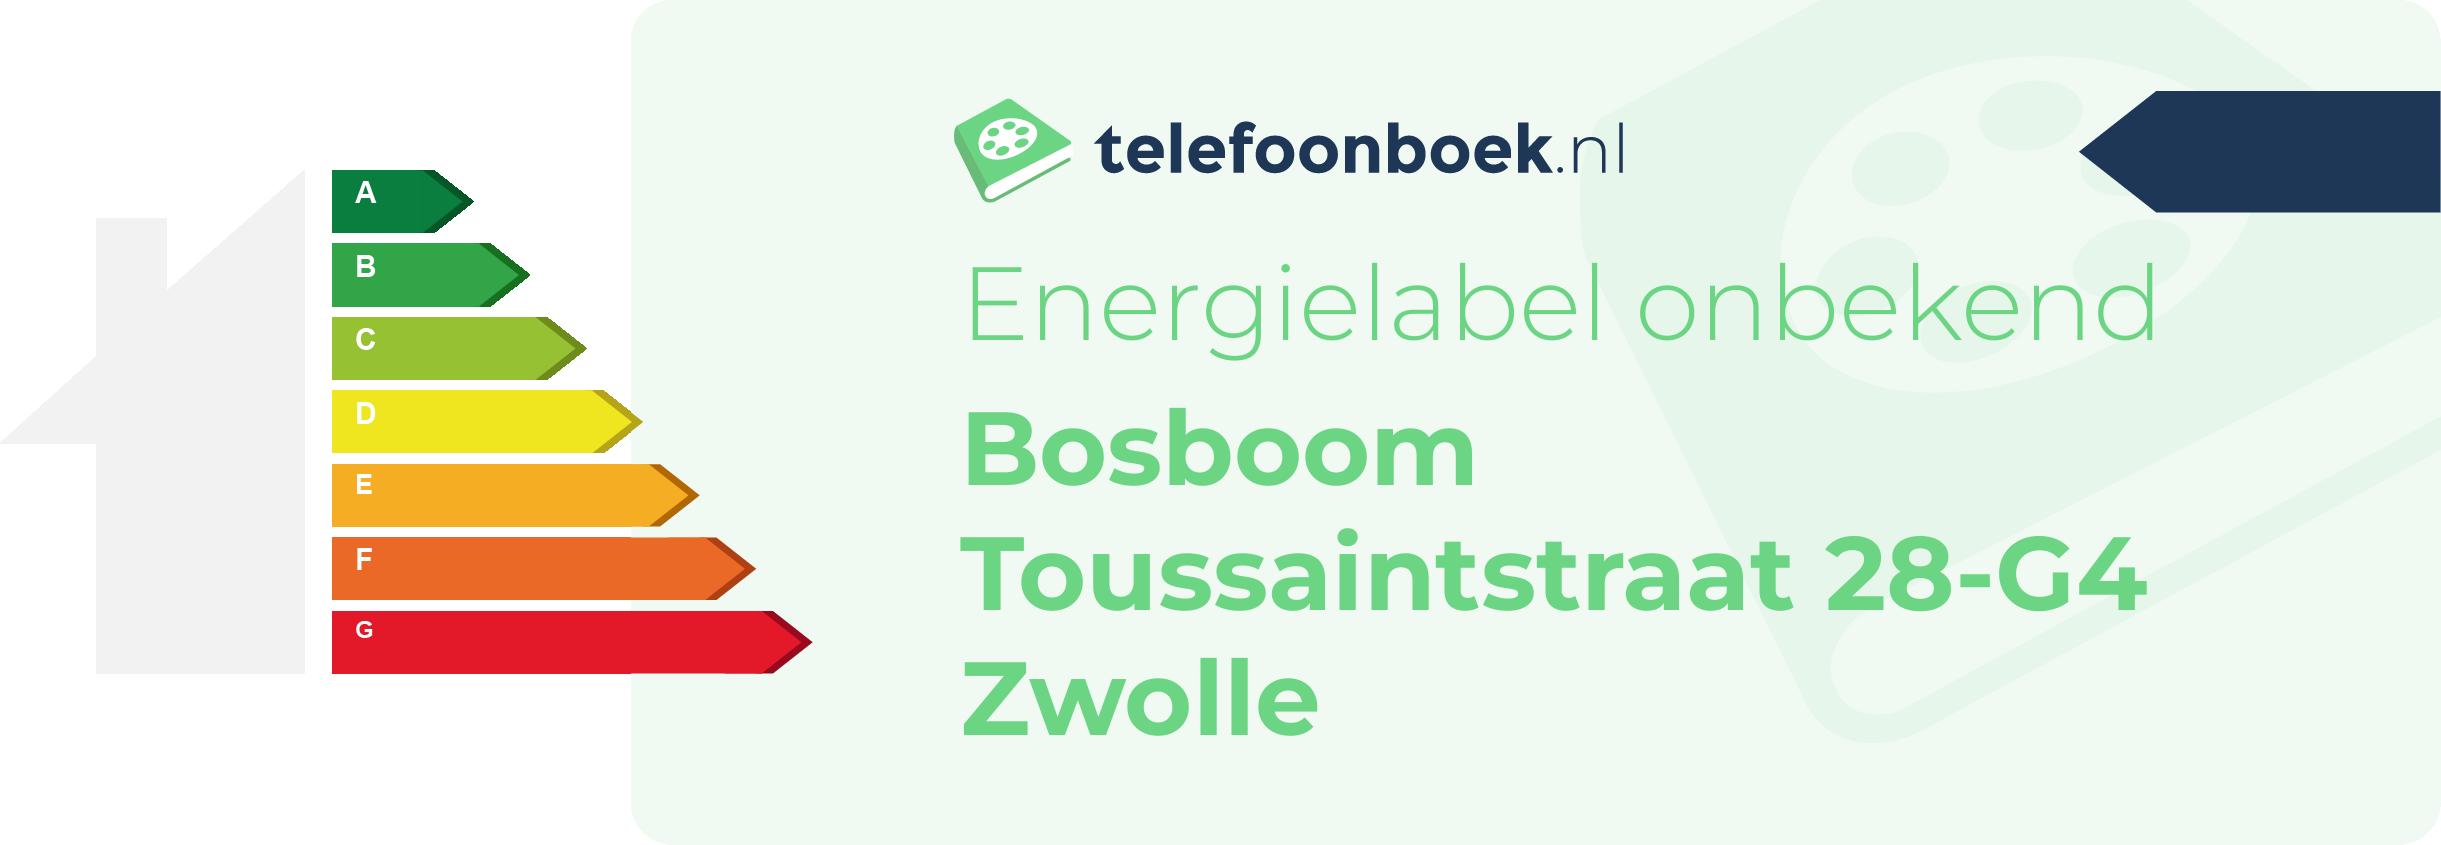 Energielabel Bosboom Toussaintstraat 28-G4 Zwolle